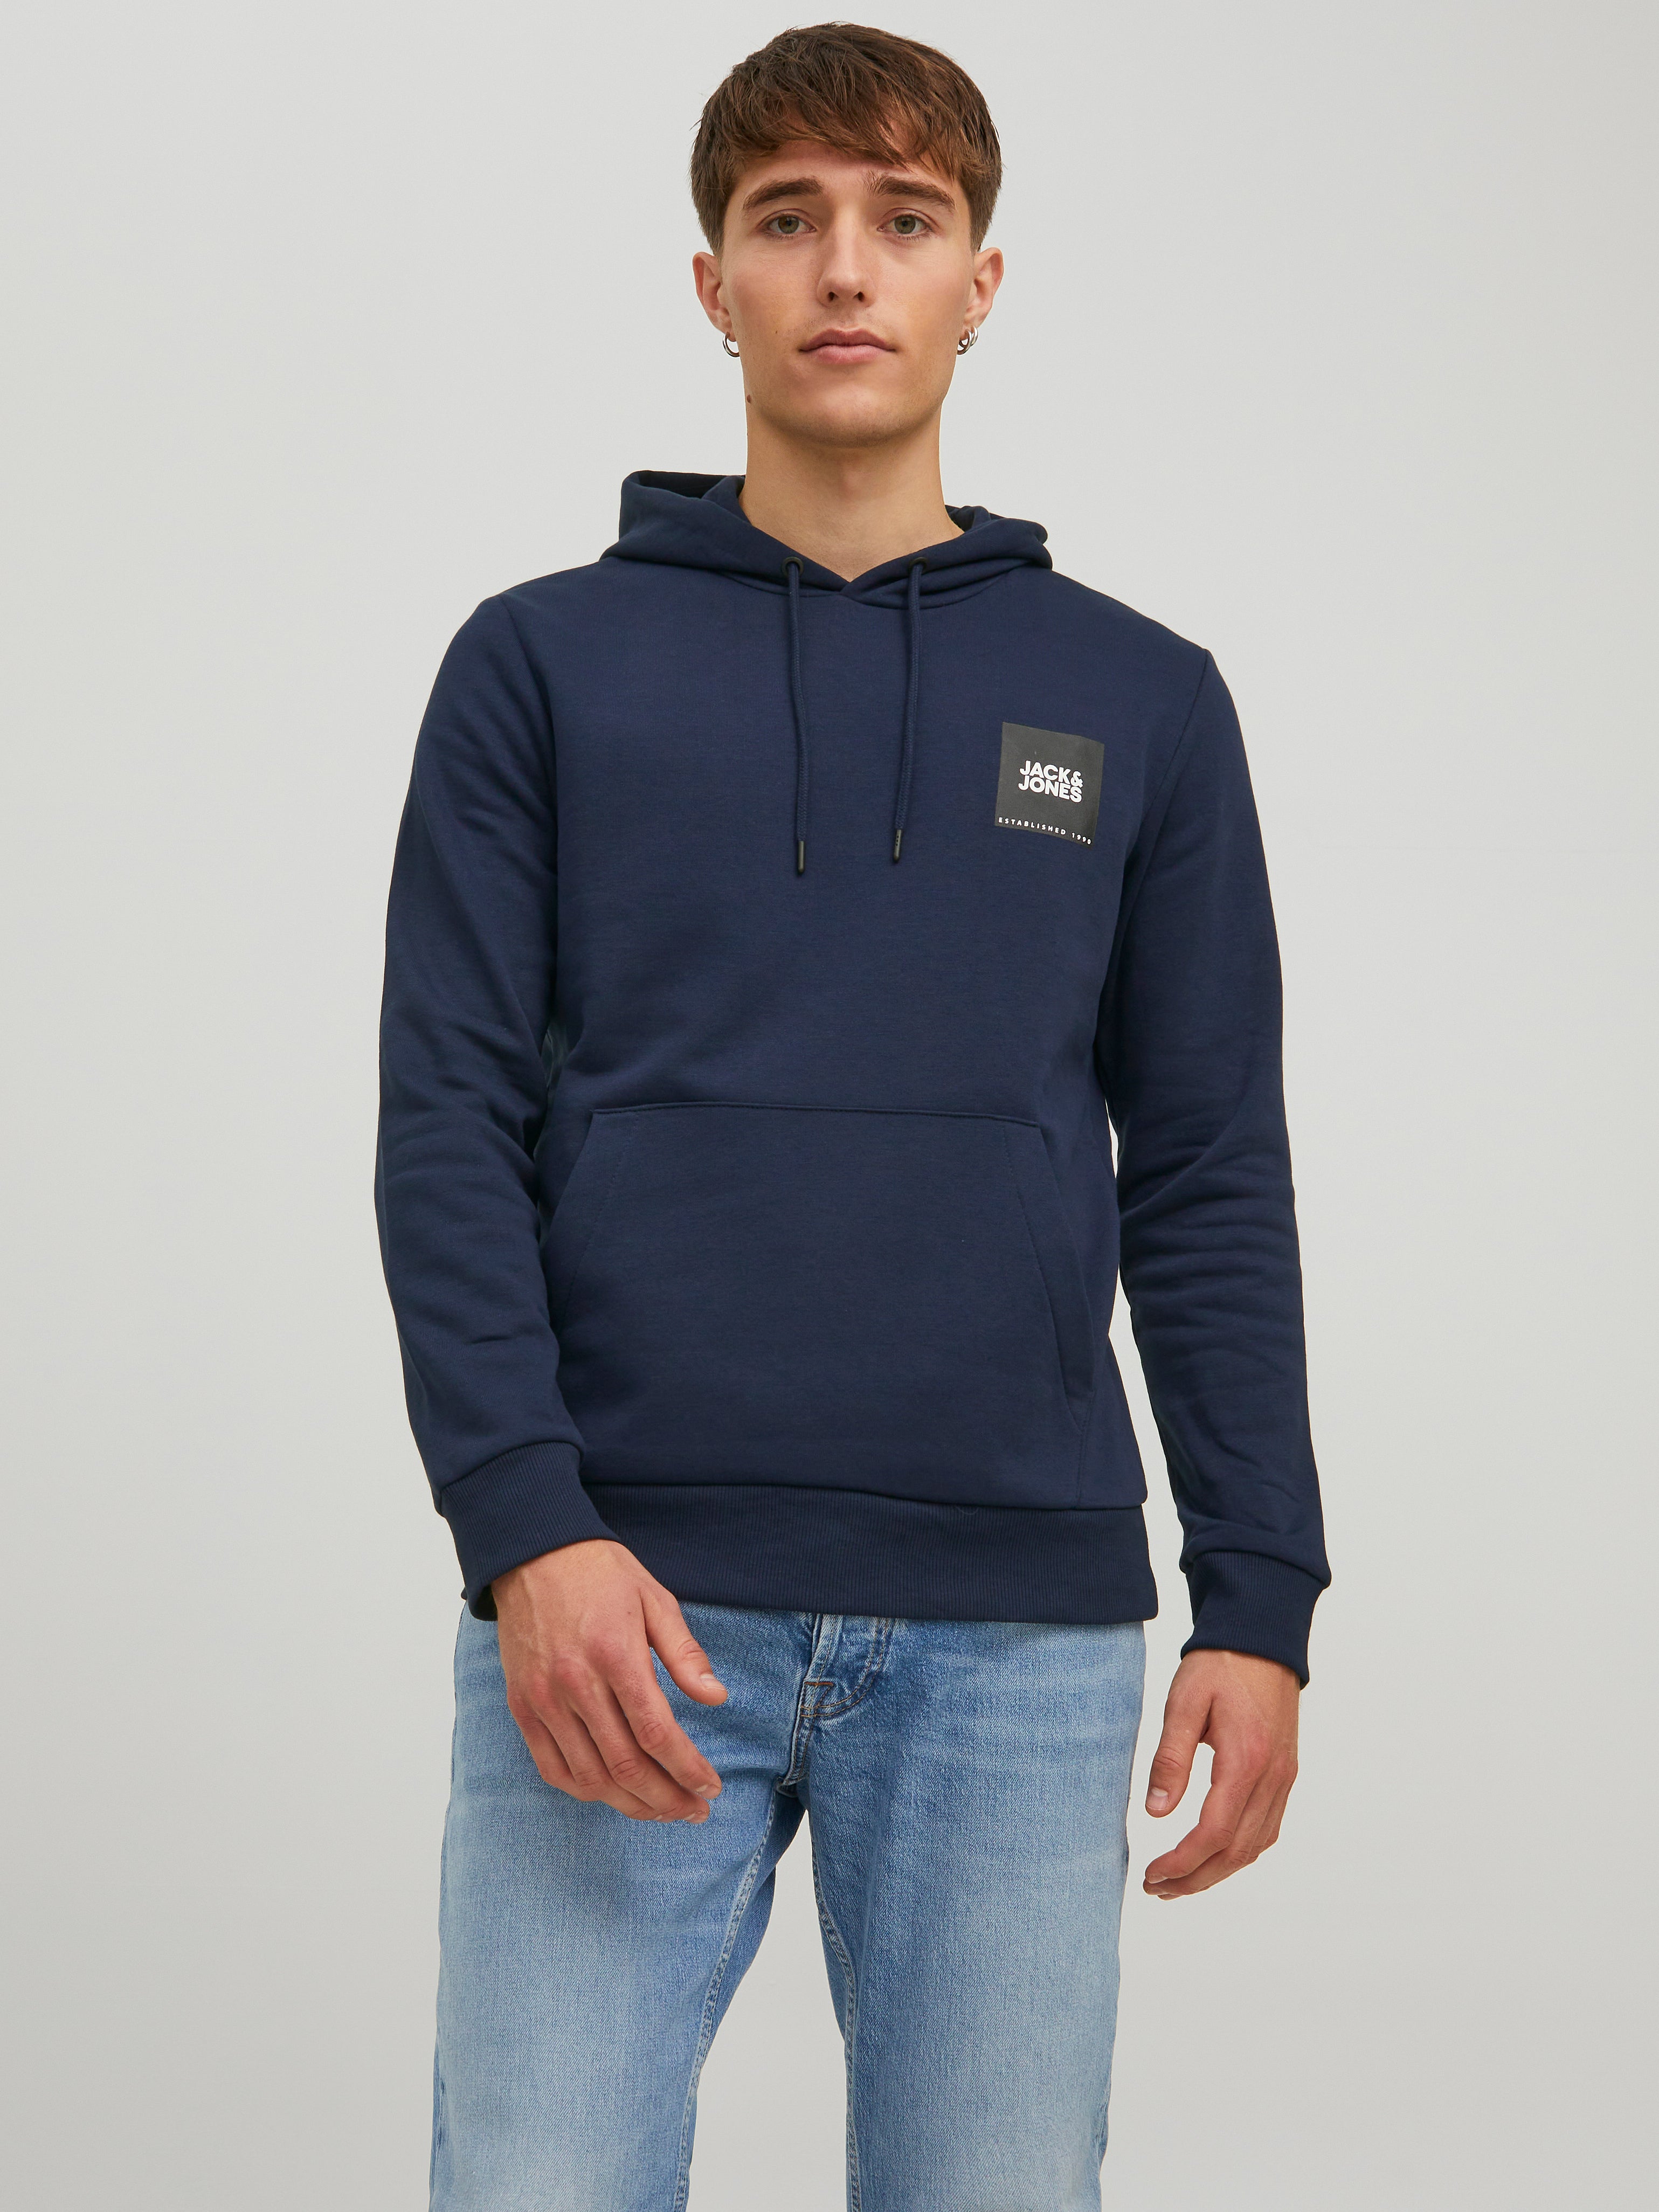 MEN FASHION Jumpers & Sweatshirts Hoodie discount 57% Gray M Jack & Jones sweatshirt 